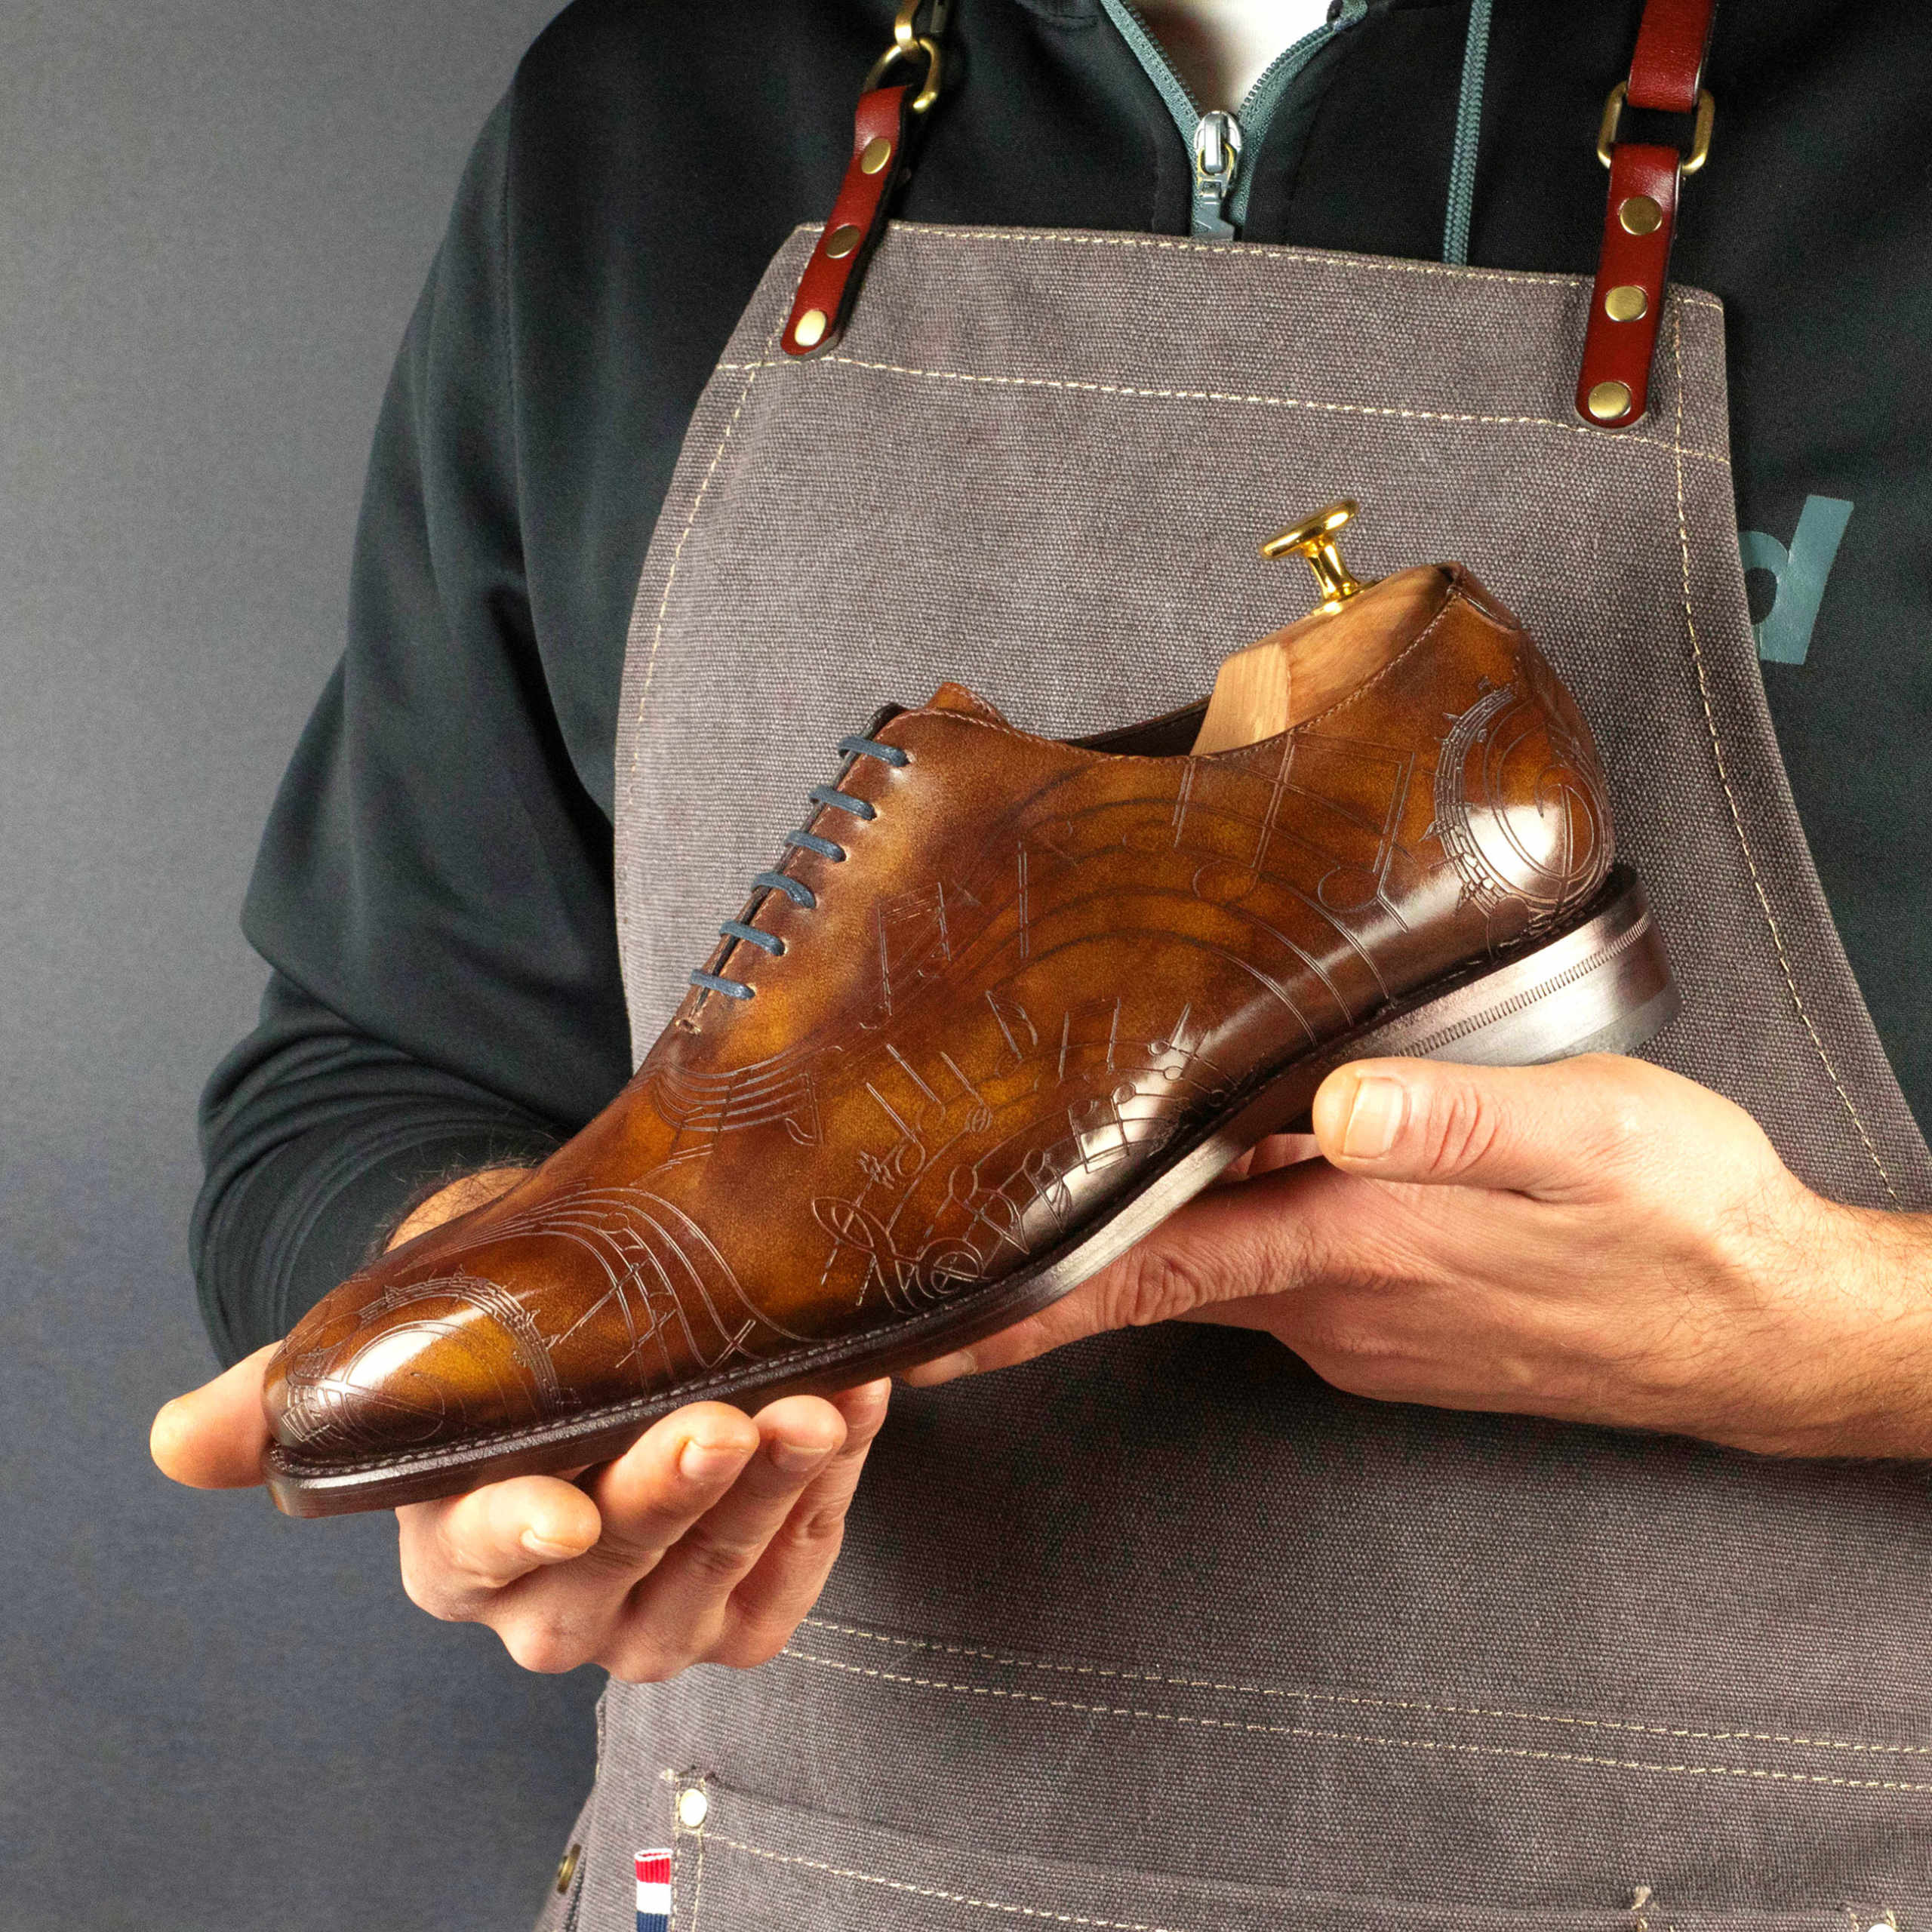 Cognac Calf Leather Wholecut Shoes - Custom Made 12